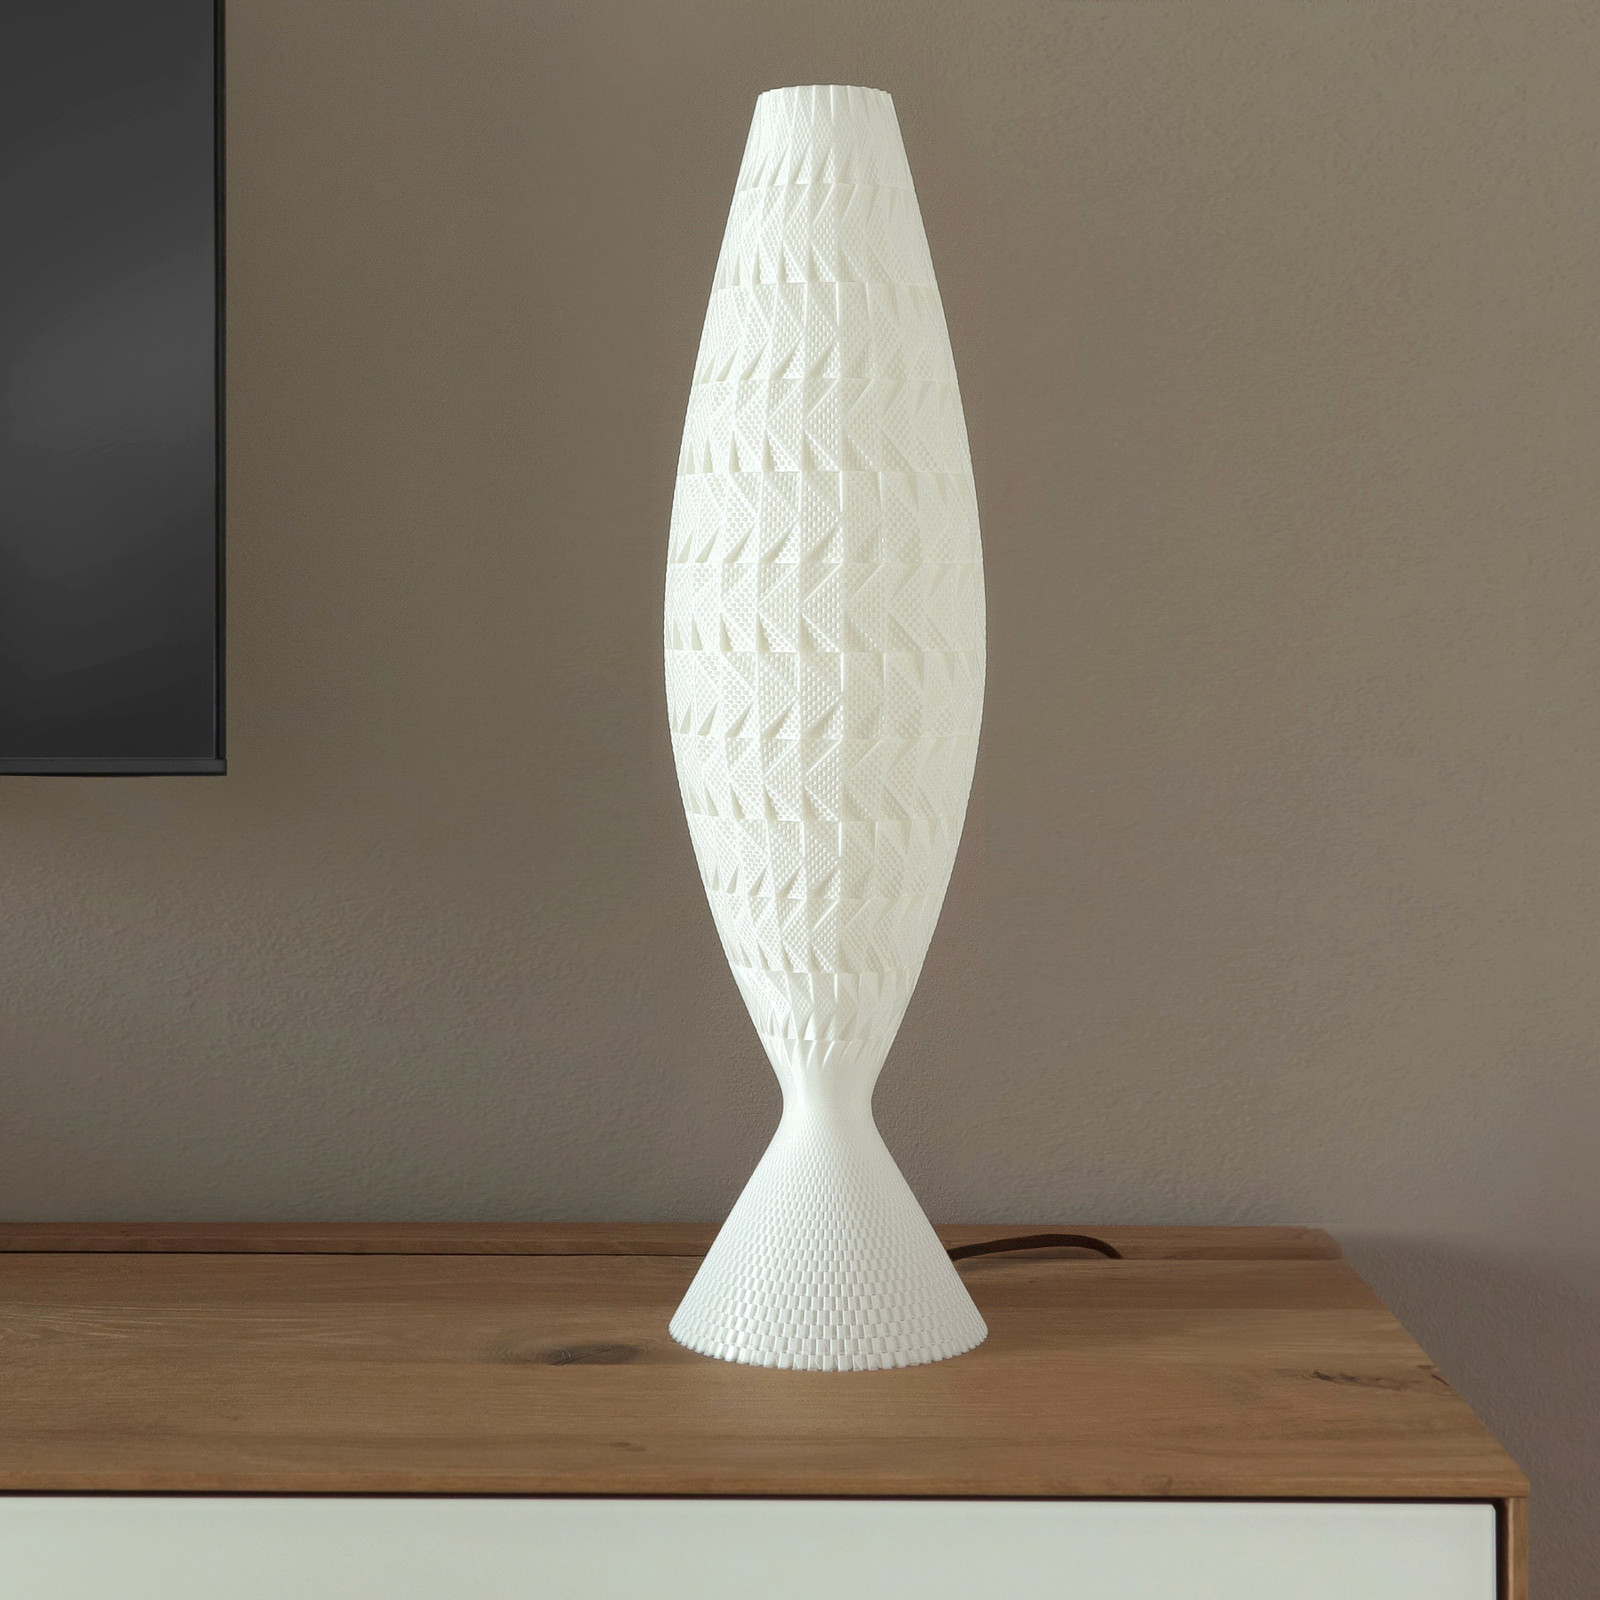 Pöytälamppu Fraktal, biomateriaali, silk, 65 cm